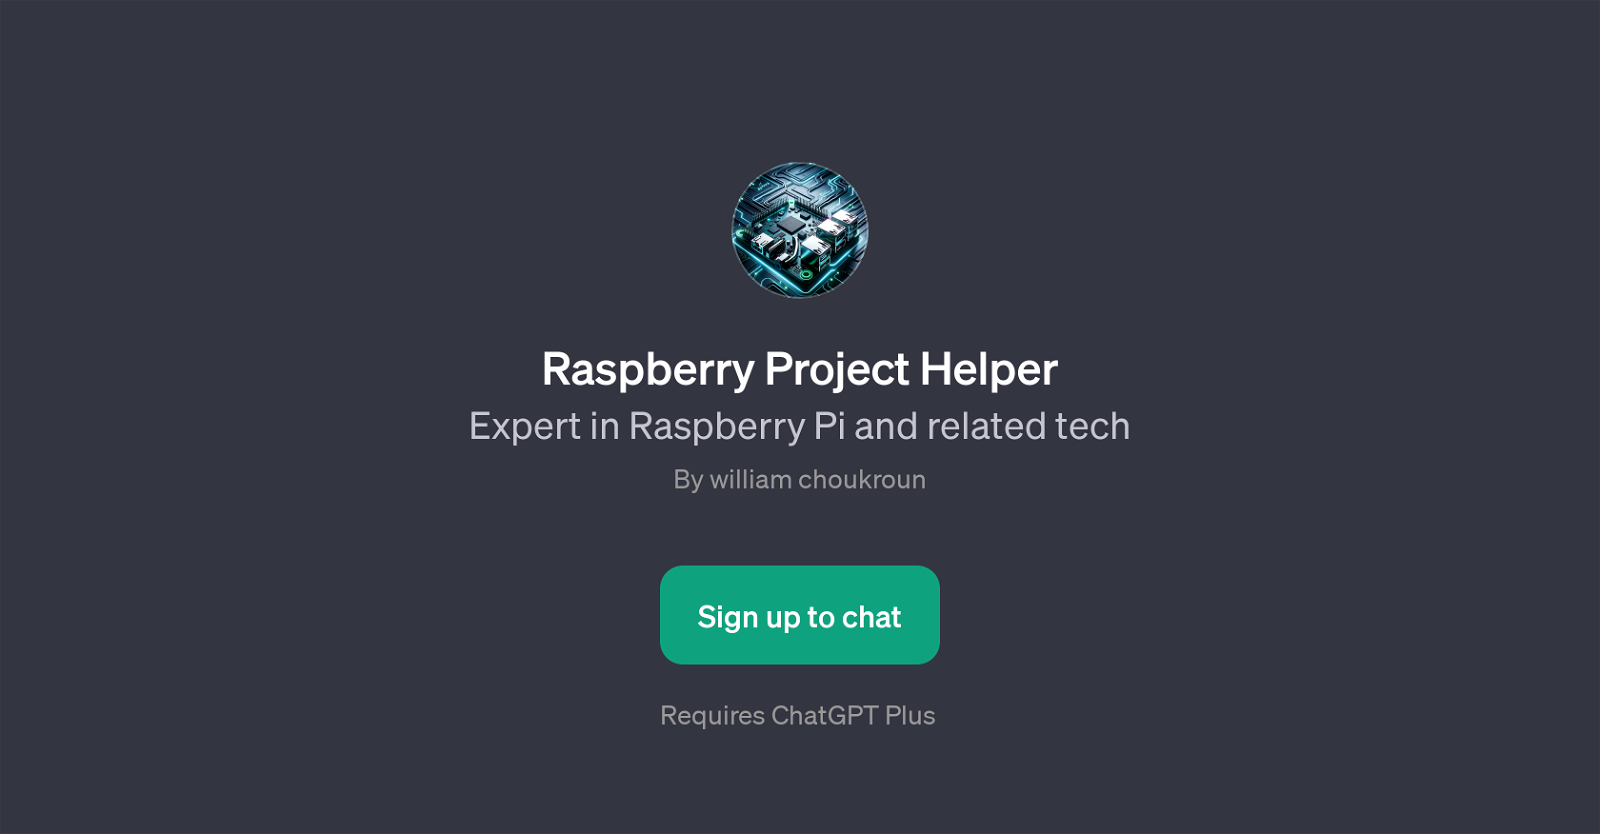 Raspberry Project Helper website